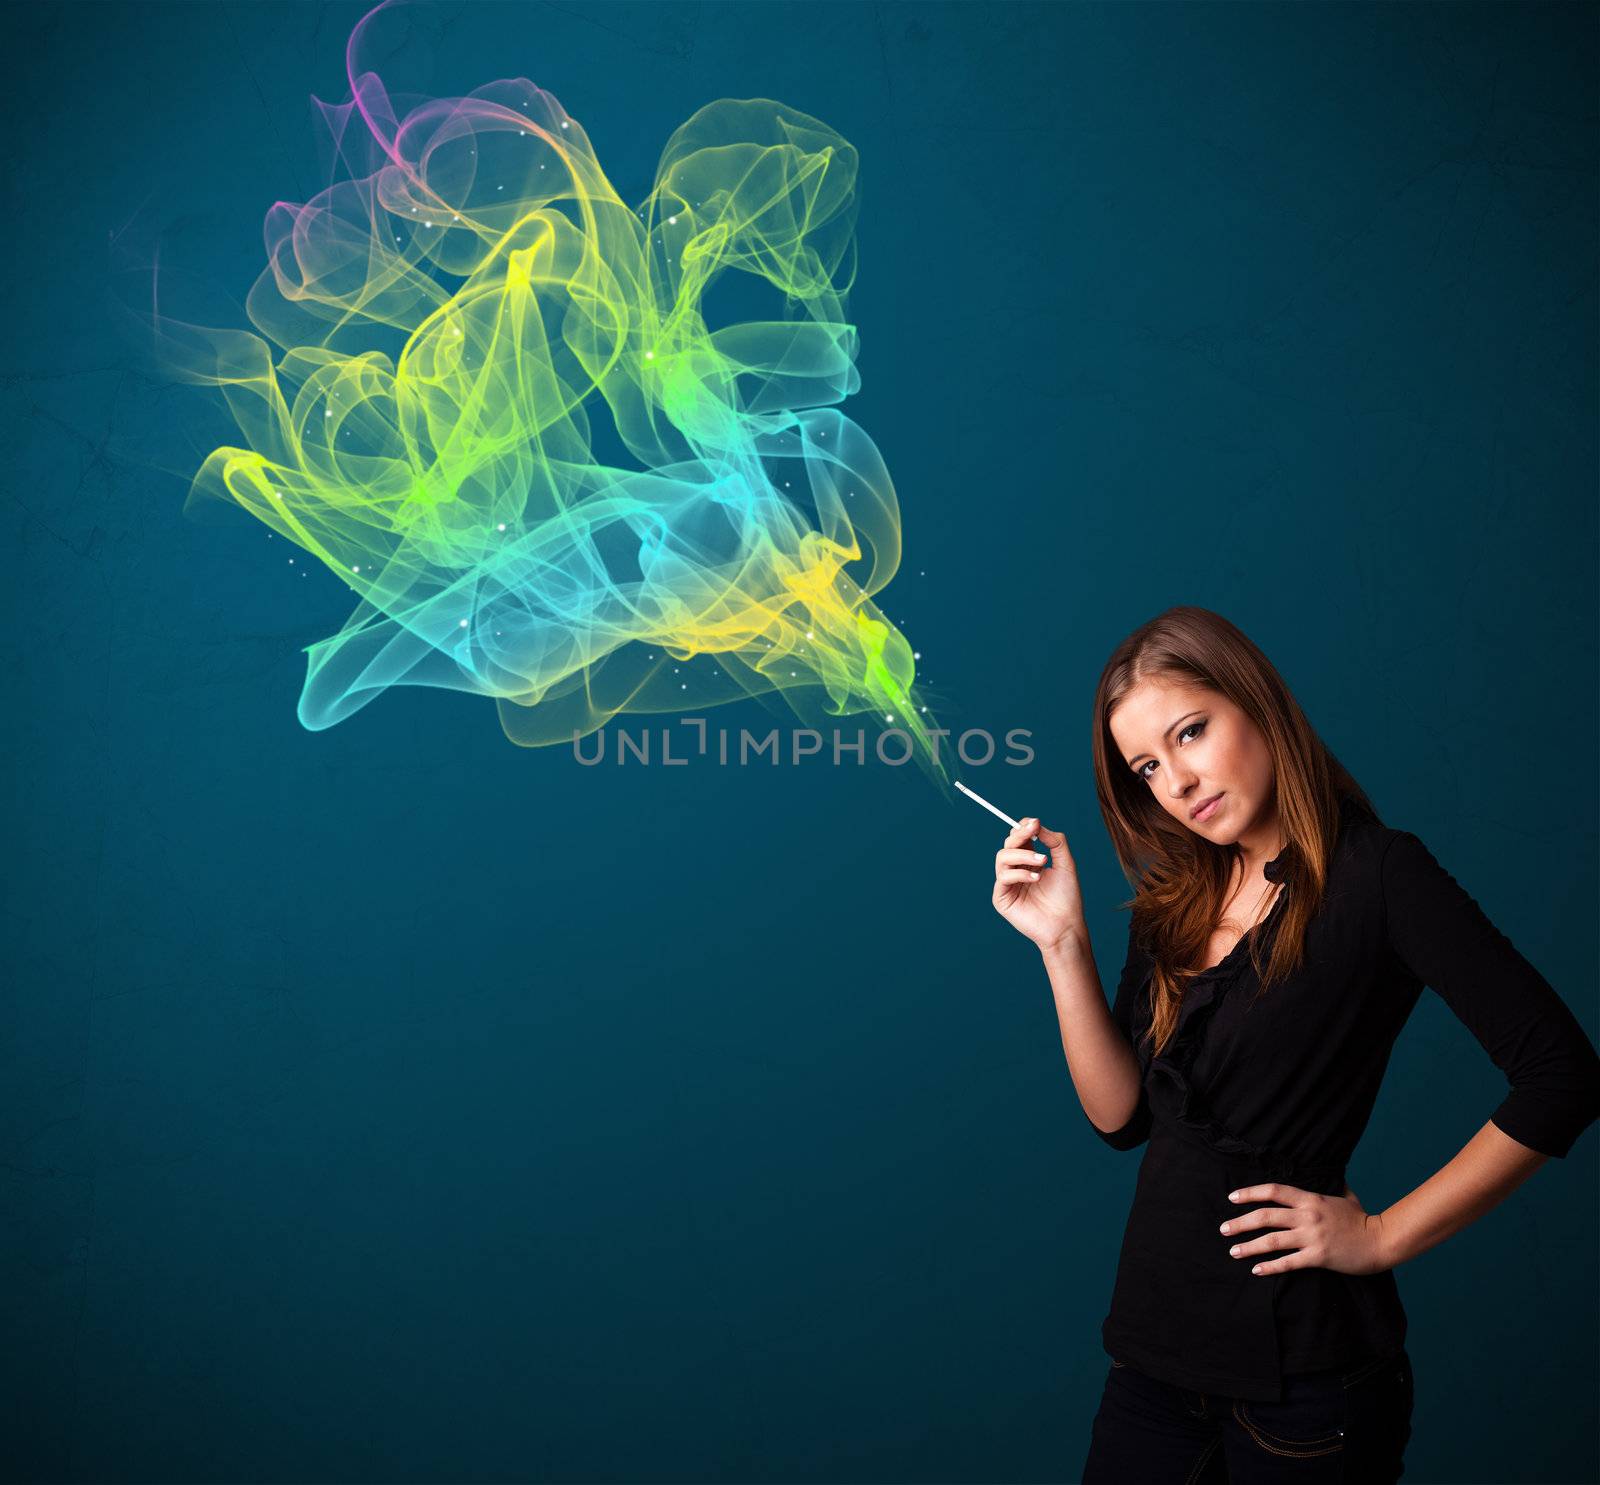 Pretty lady smoking cigarette with colorful smoke by ra2studio